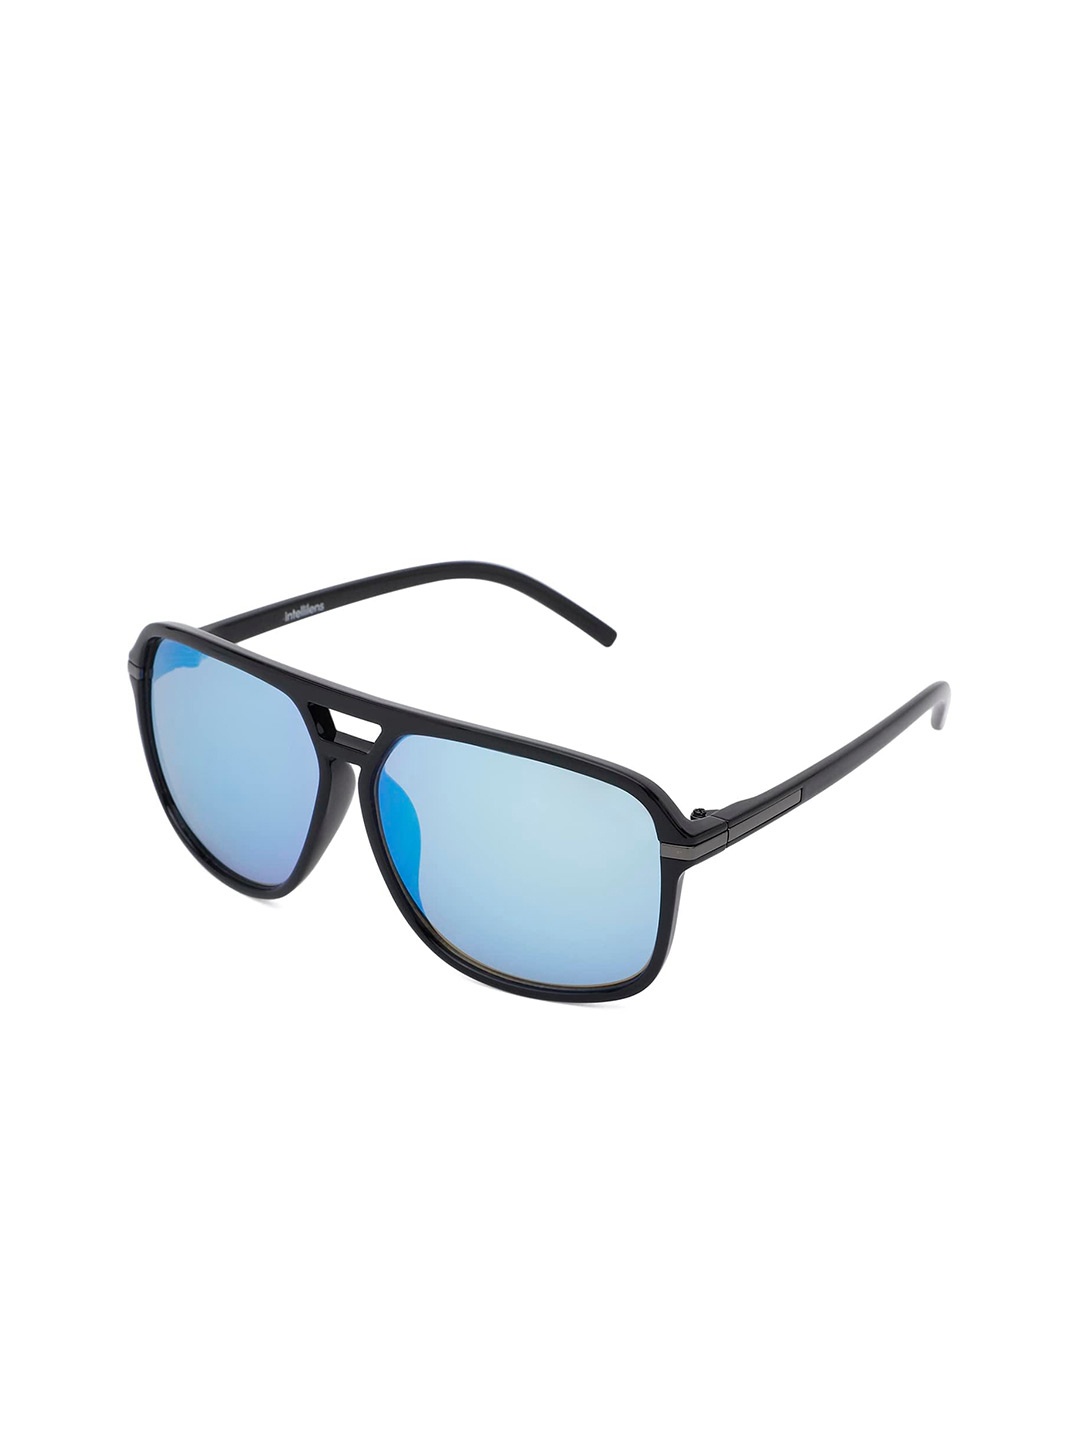 

Intellilens Unisex Round Sunglasses with Polarised Lens, Blue